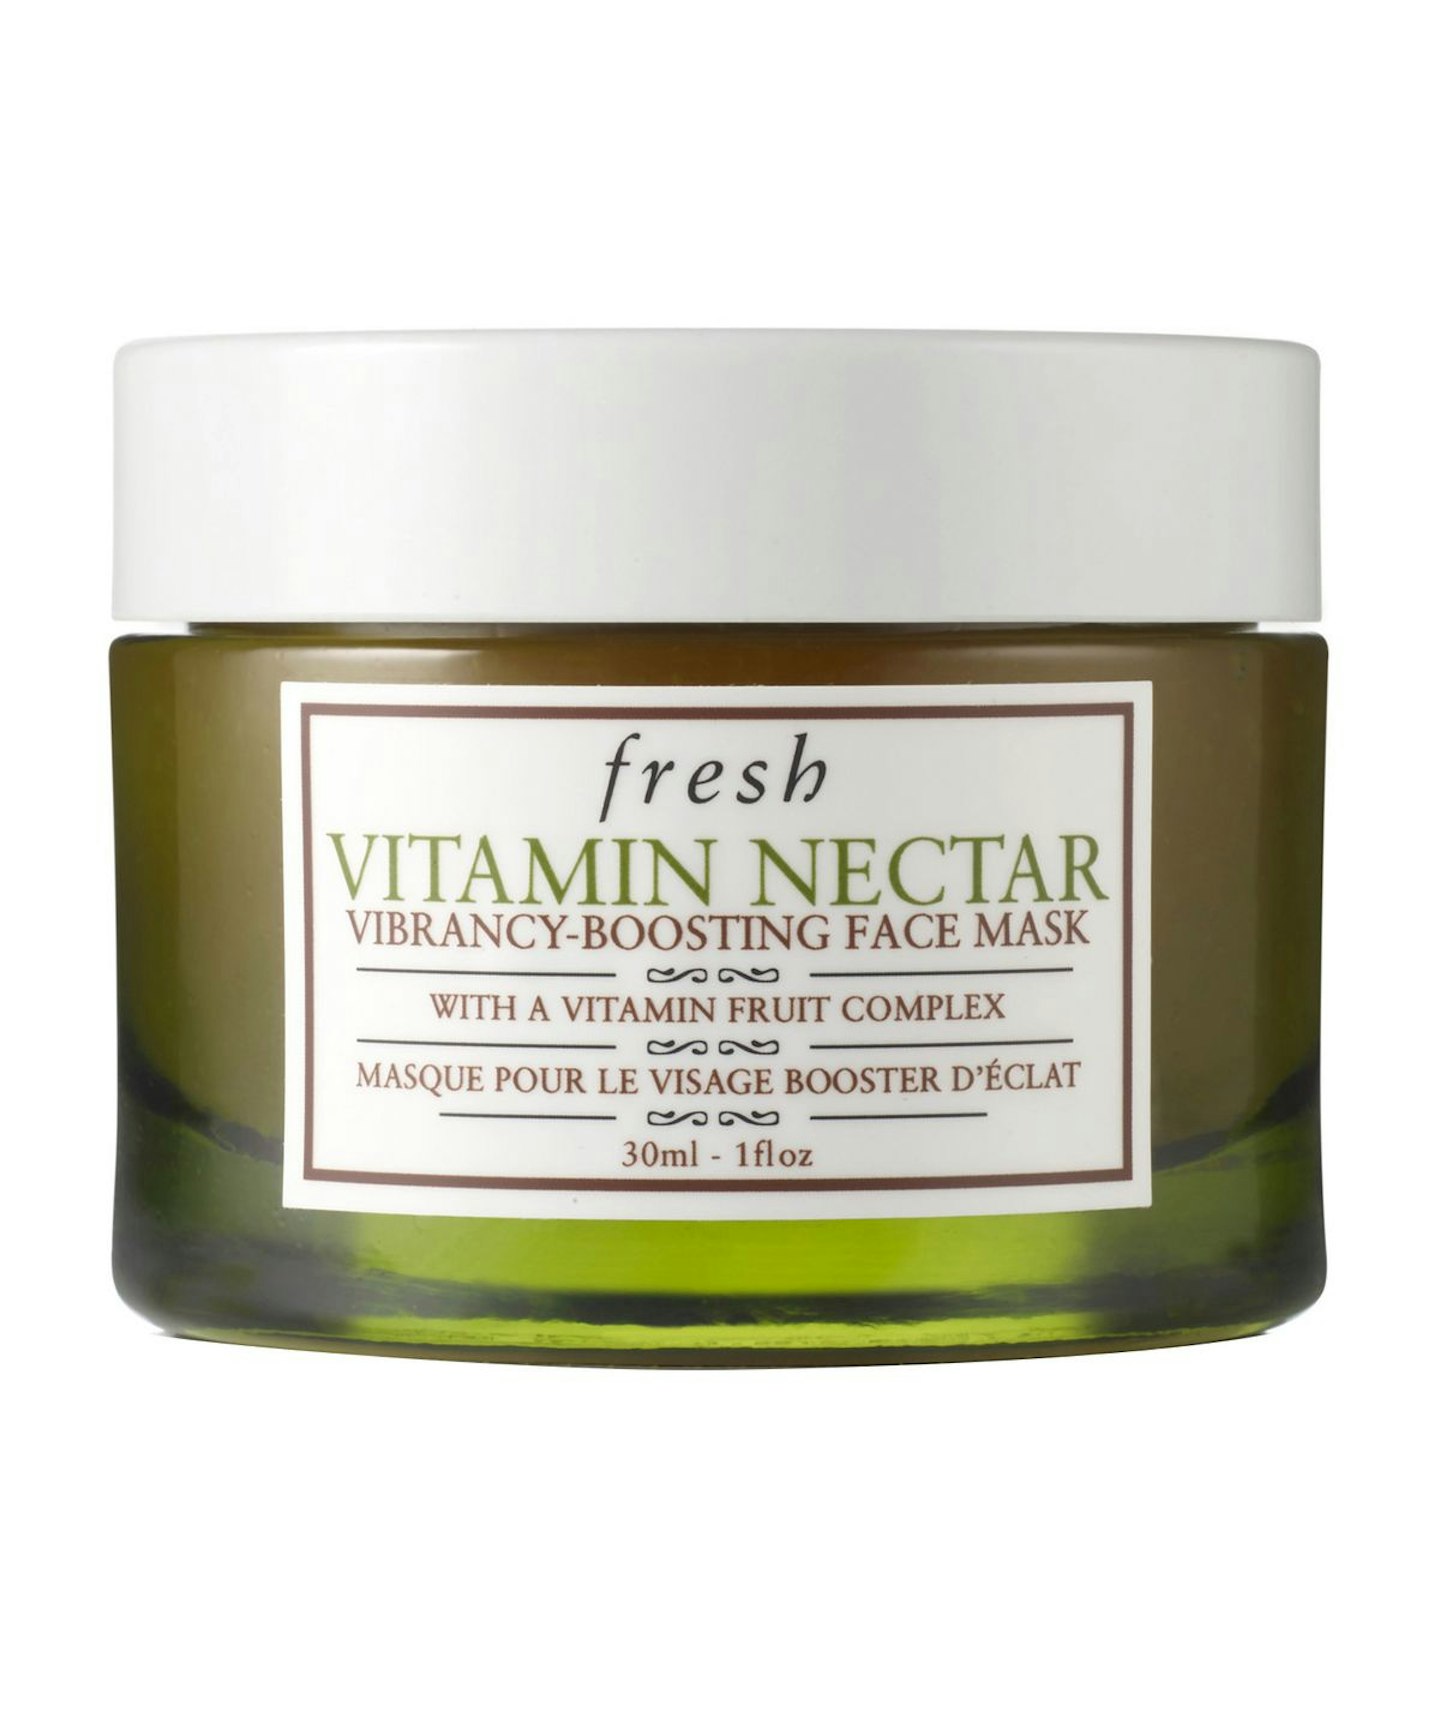 Fresh Vitamin Nectar Vibrancy-Boosting Face Mask, £21